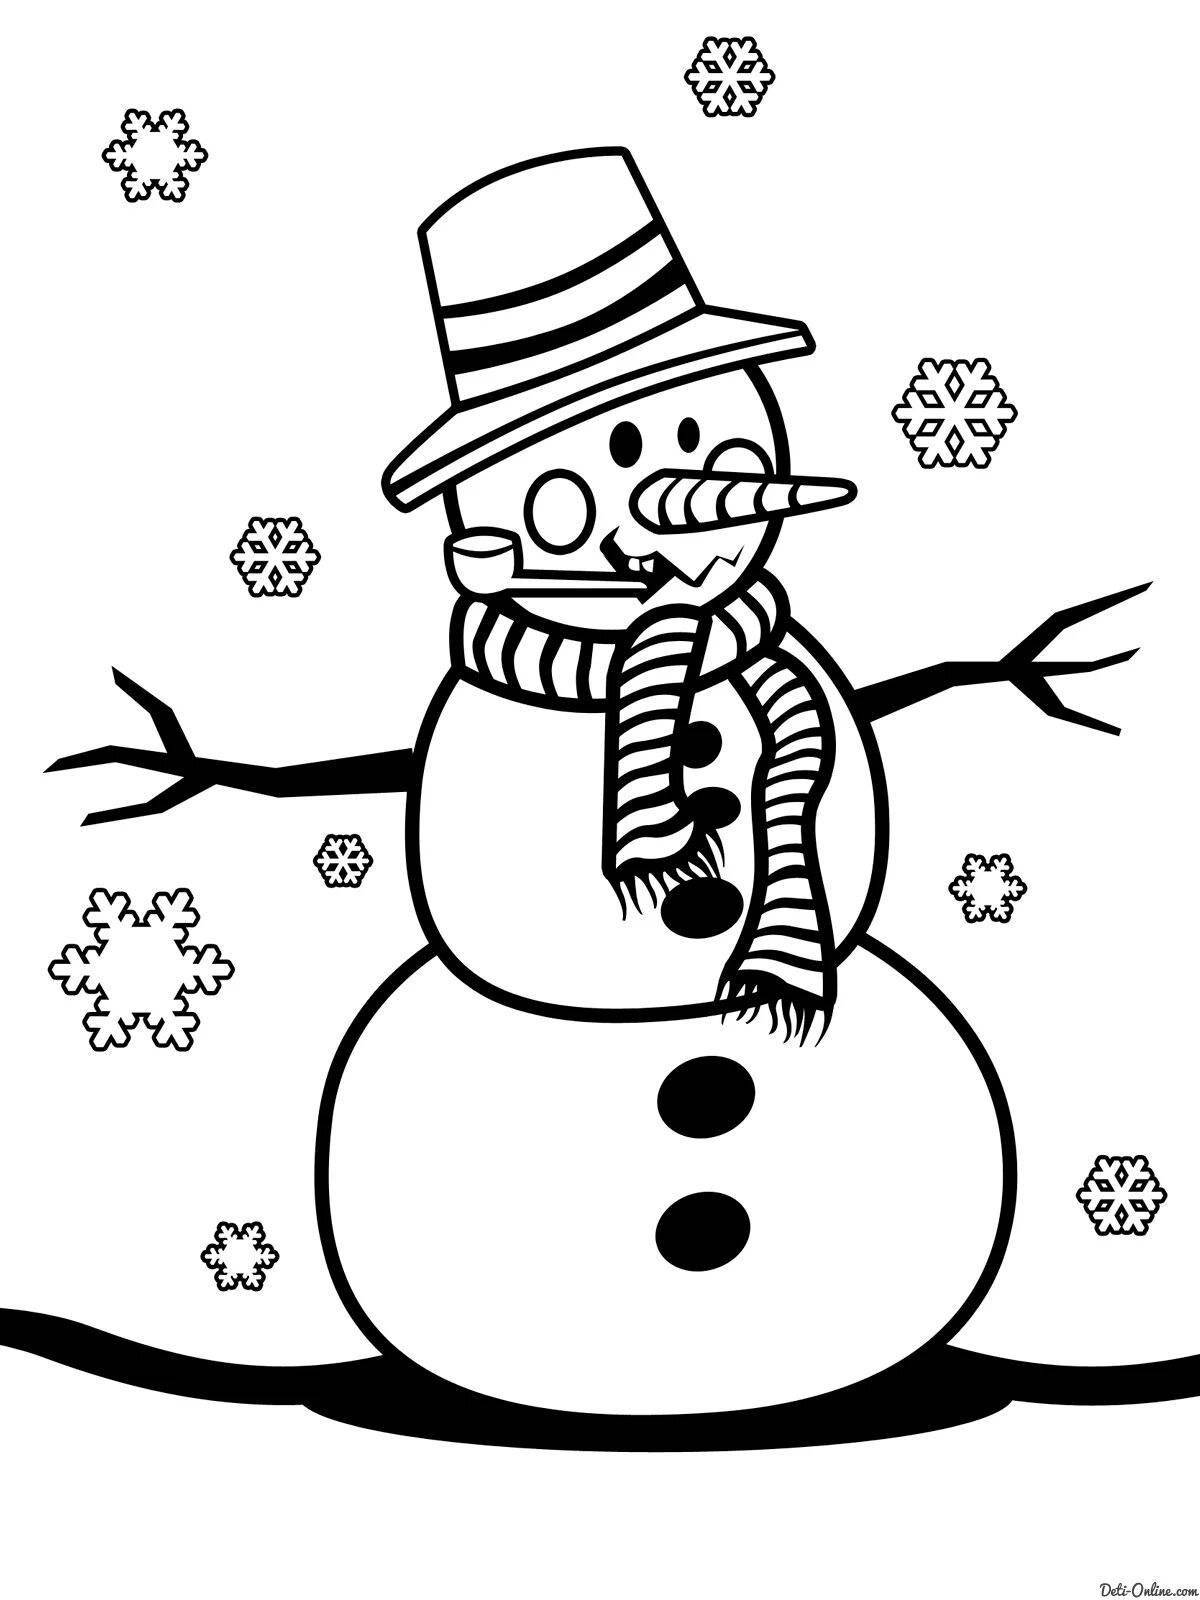 Fun coloring cute snowman